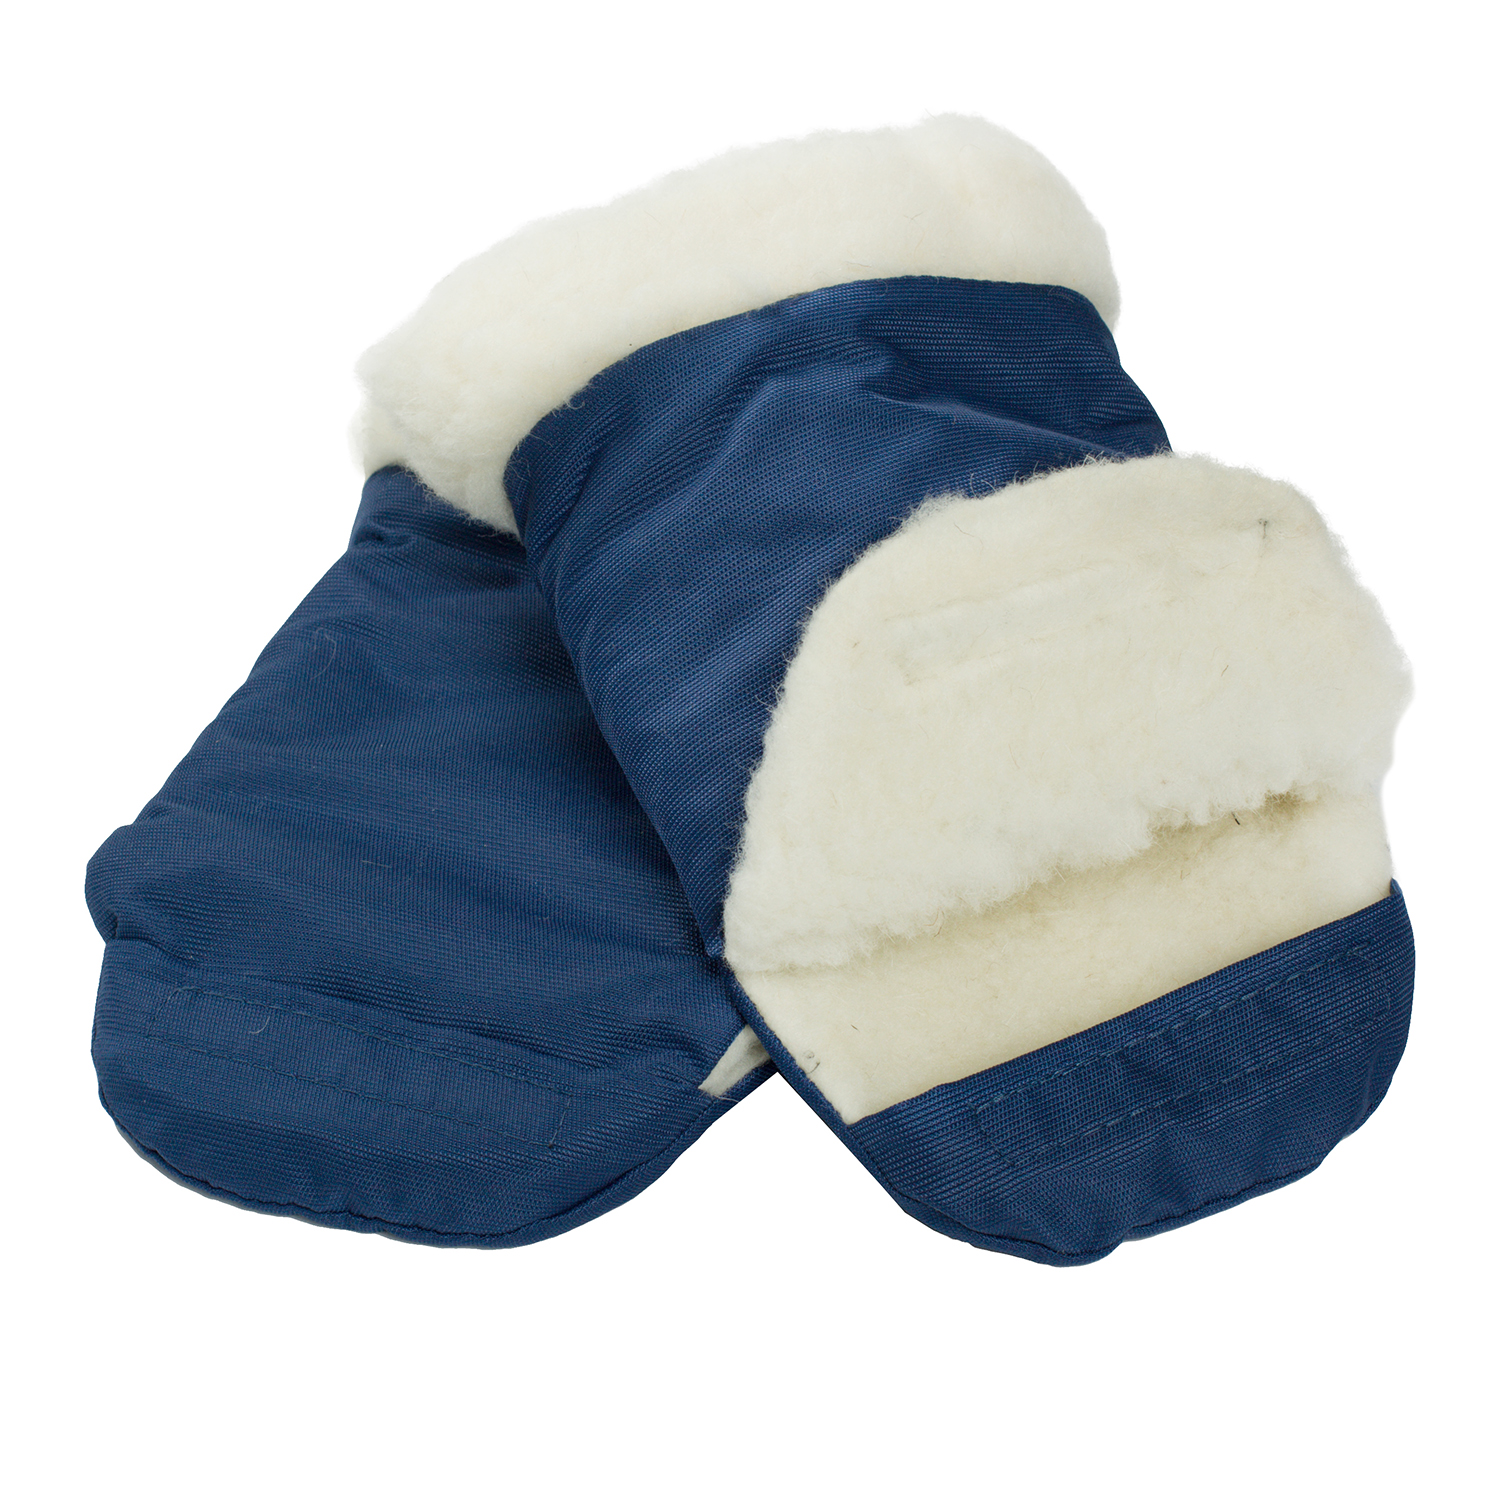 Муфта-рукавички для коляски Чудо-чадо меховая Прайм синяя МРМ03-001 - фото 3